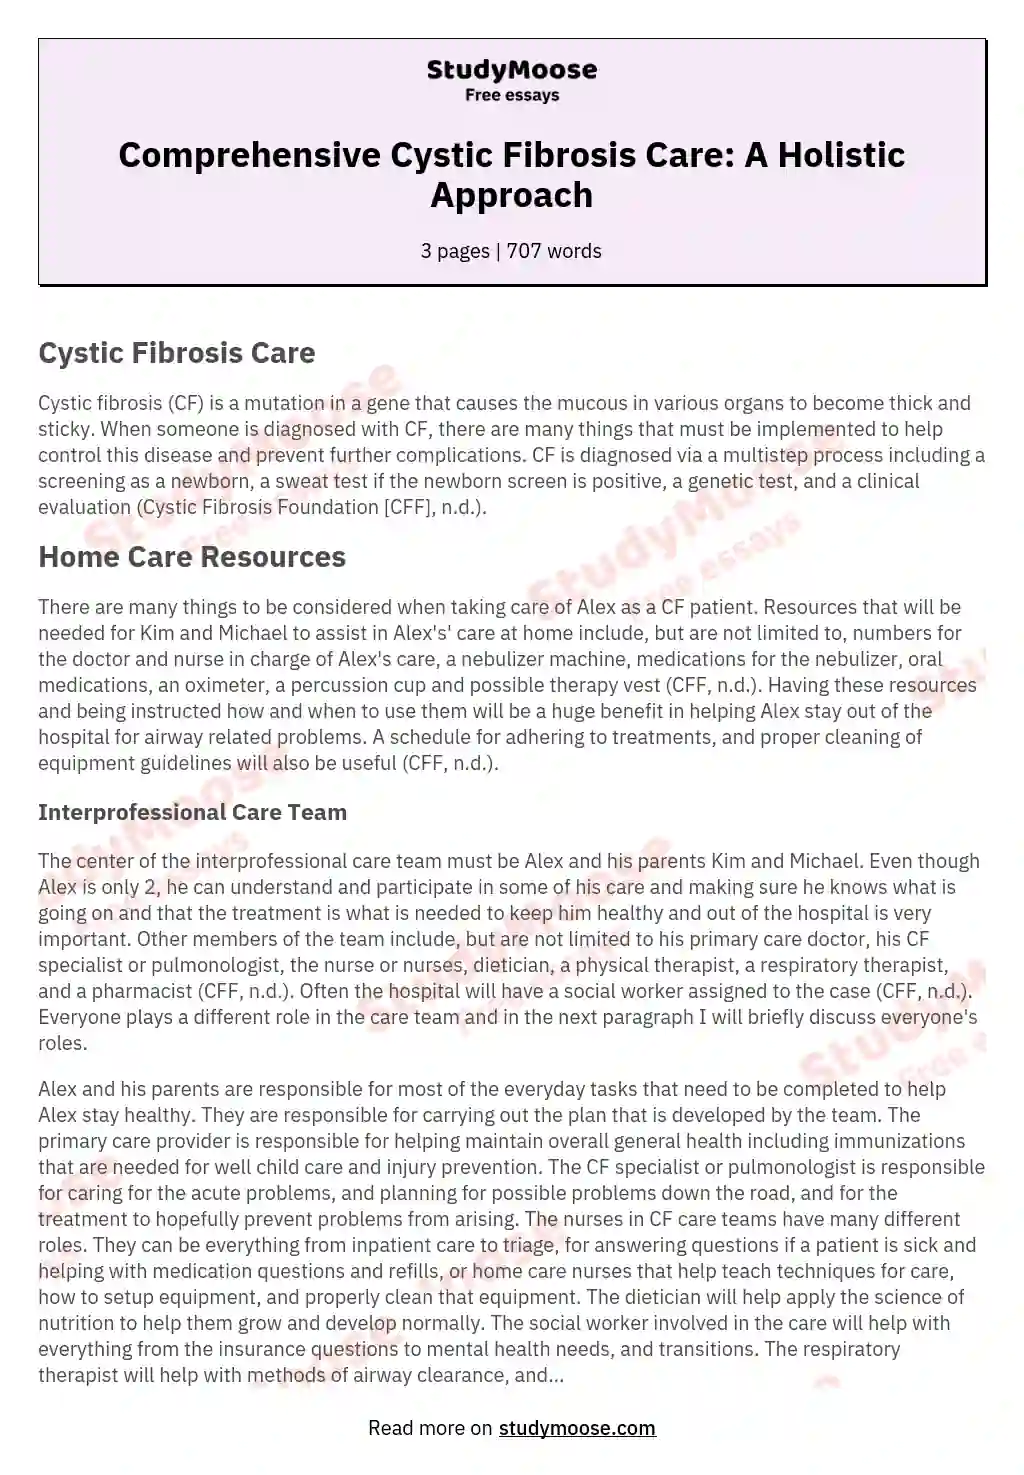 Comprehensive Cystic Fibrosis Care: A Holistic Approach essay